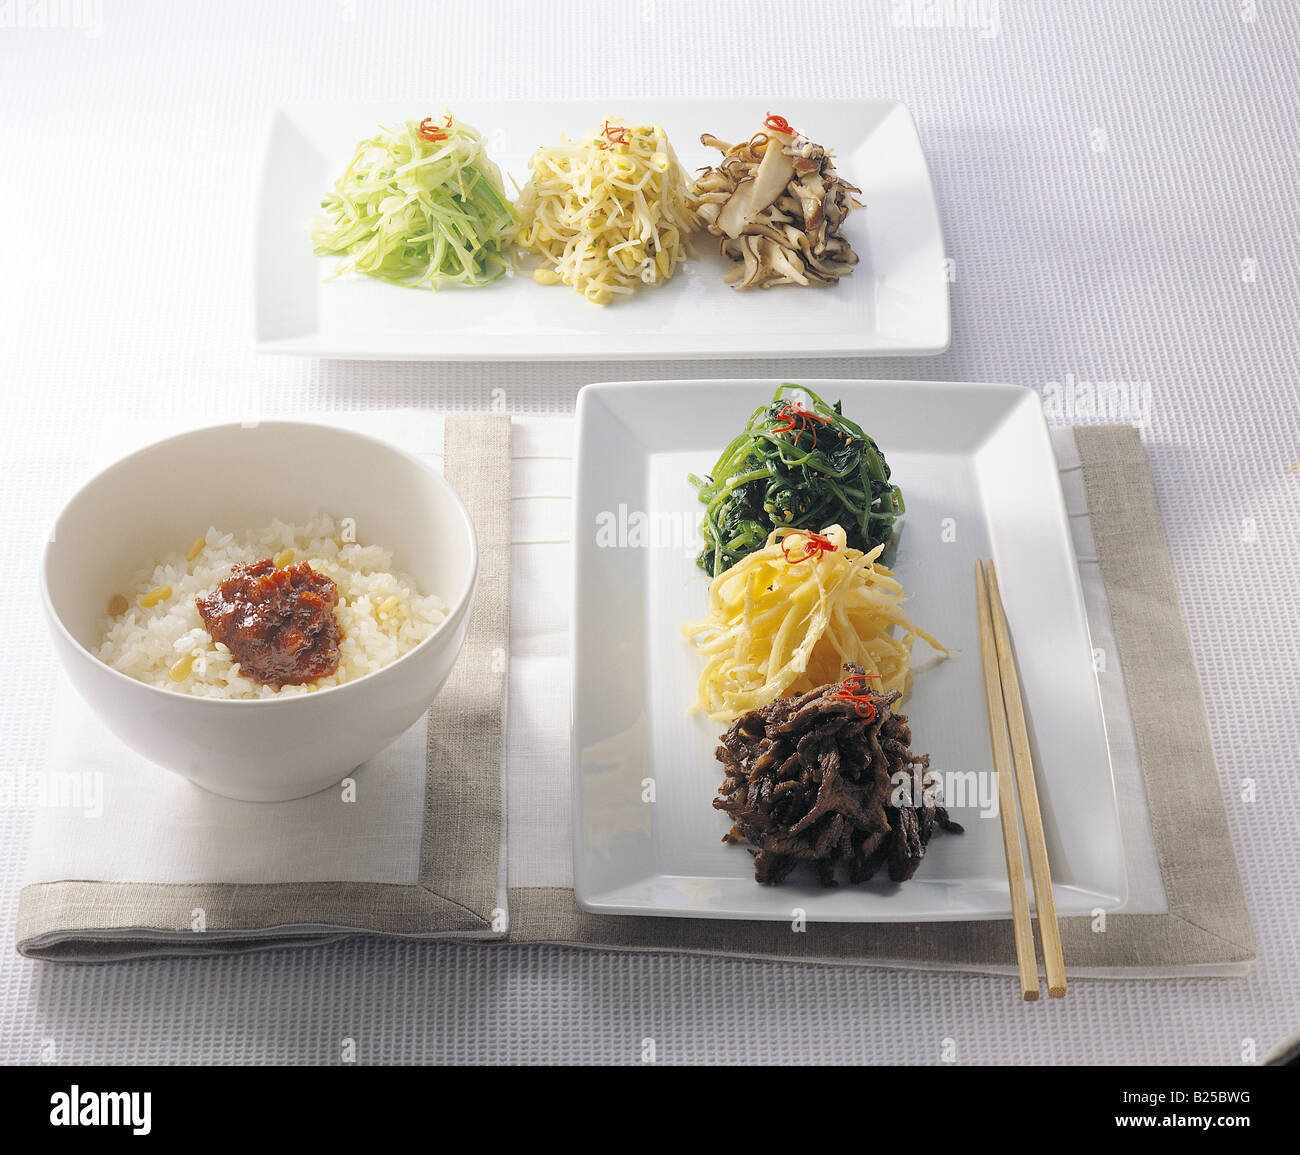 Korean food - kimchi and rice Stock Photo